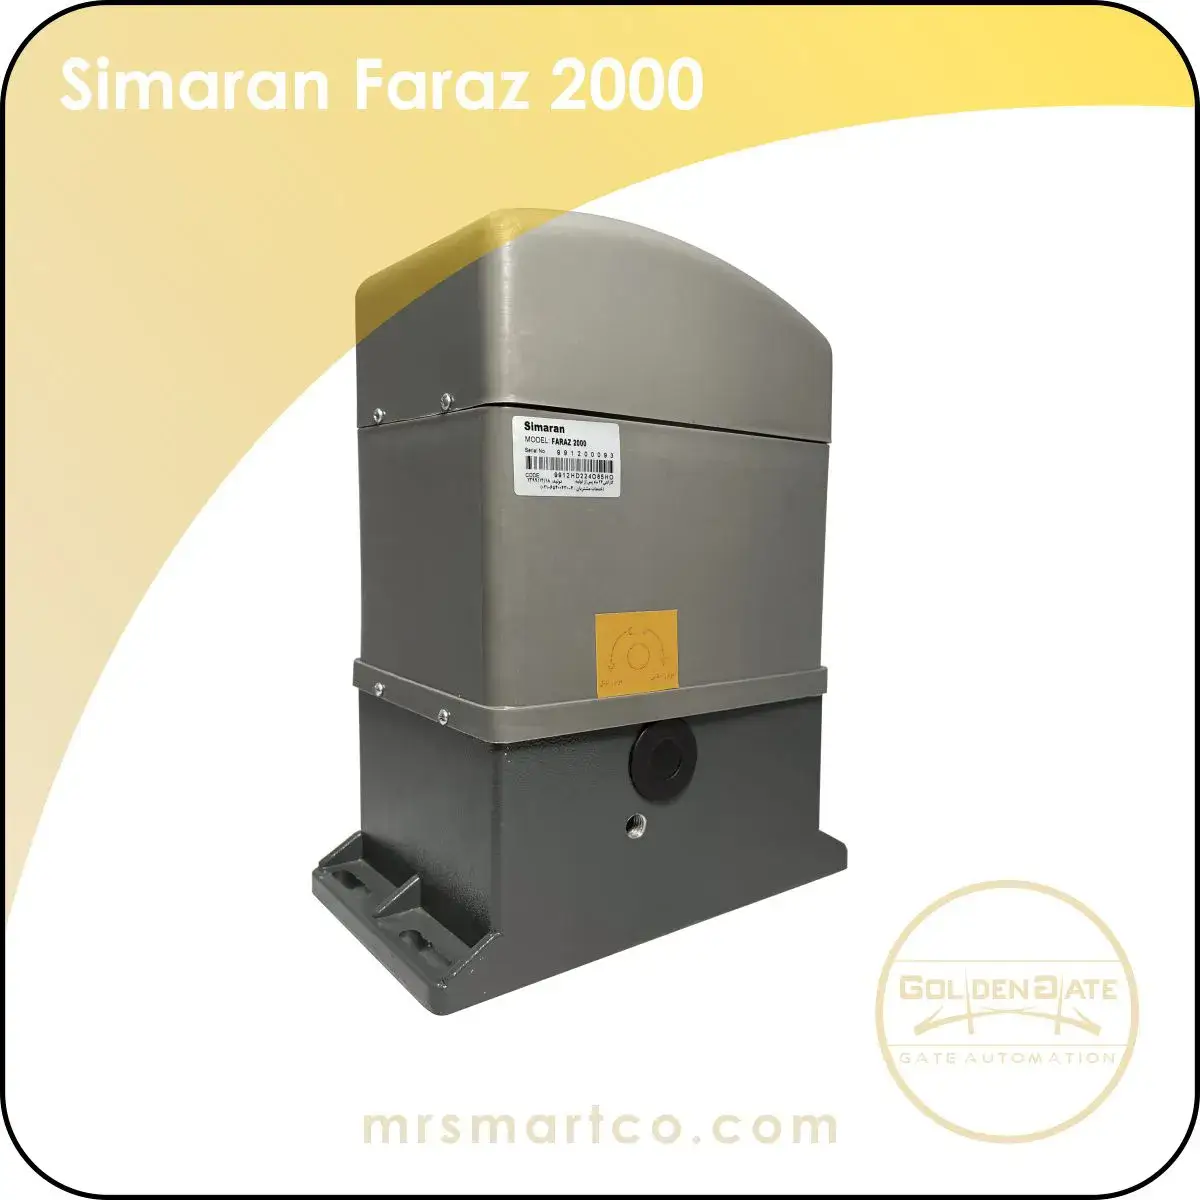 Simaran Faraz 2000